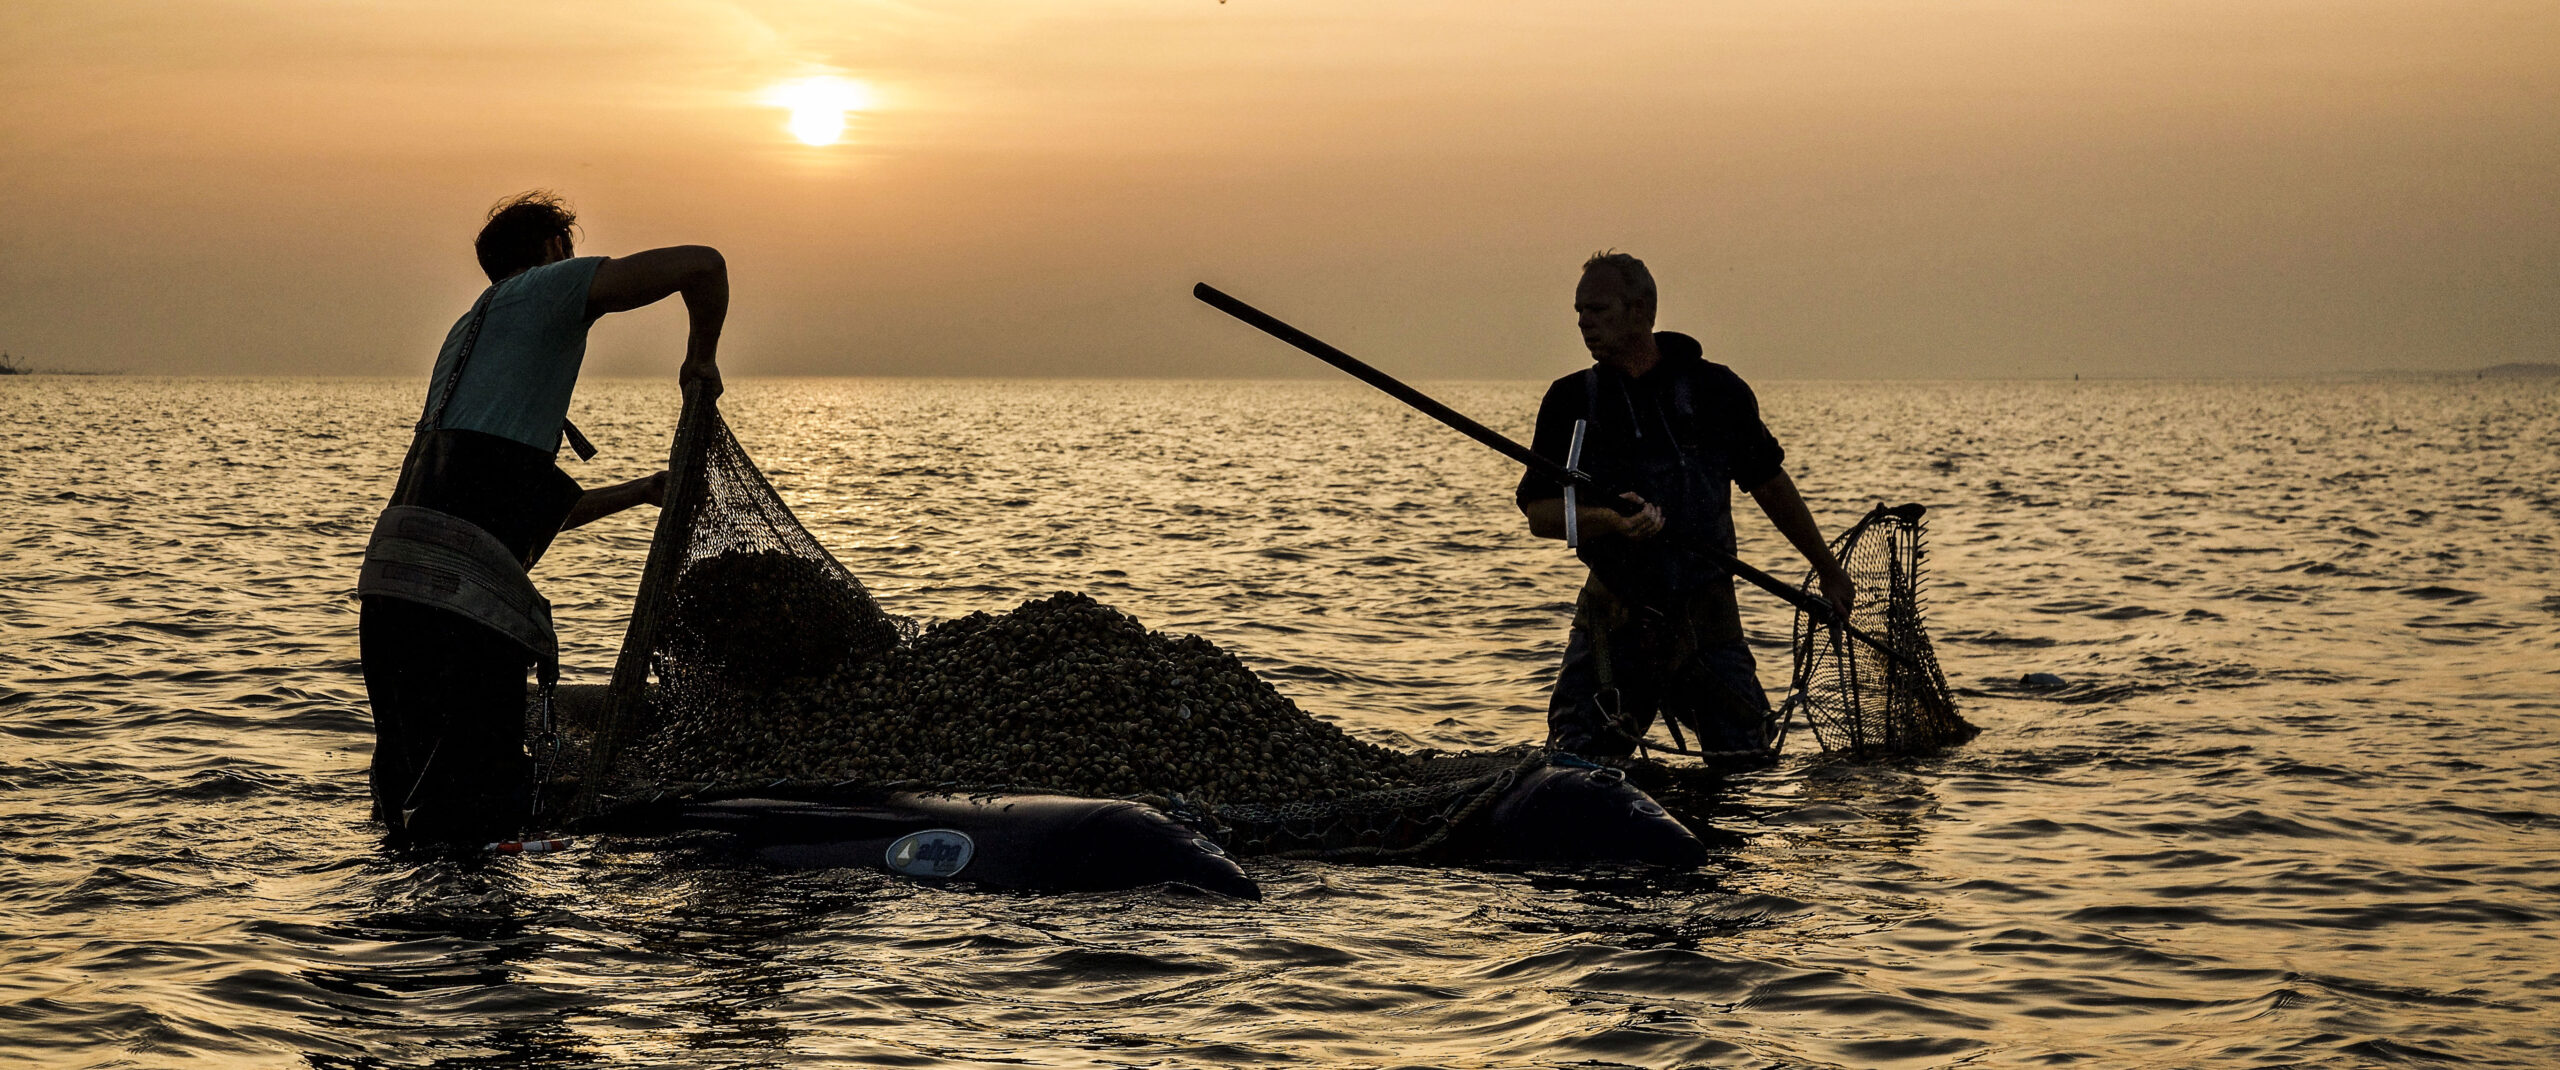 Kokkelvissers werken ondermeer in de zonsondergang in het Duitse waddengebied